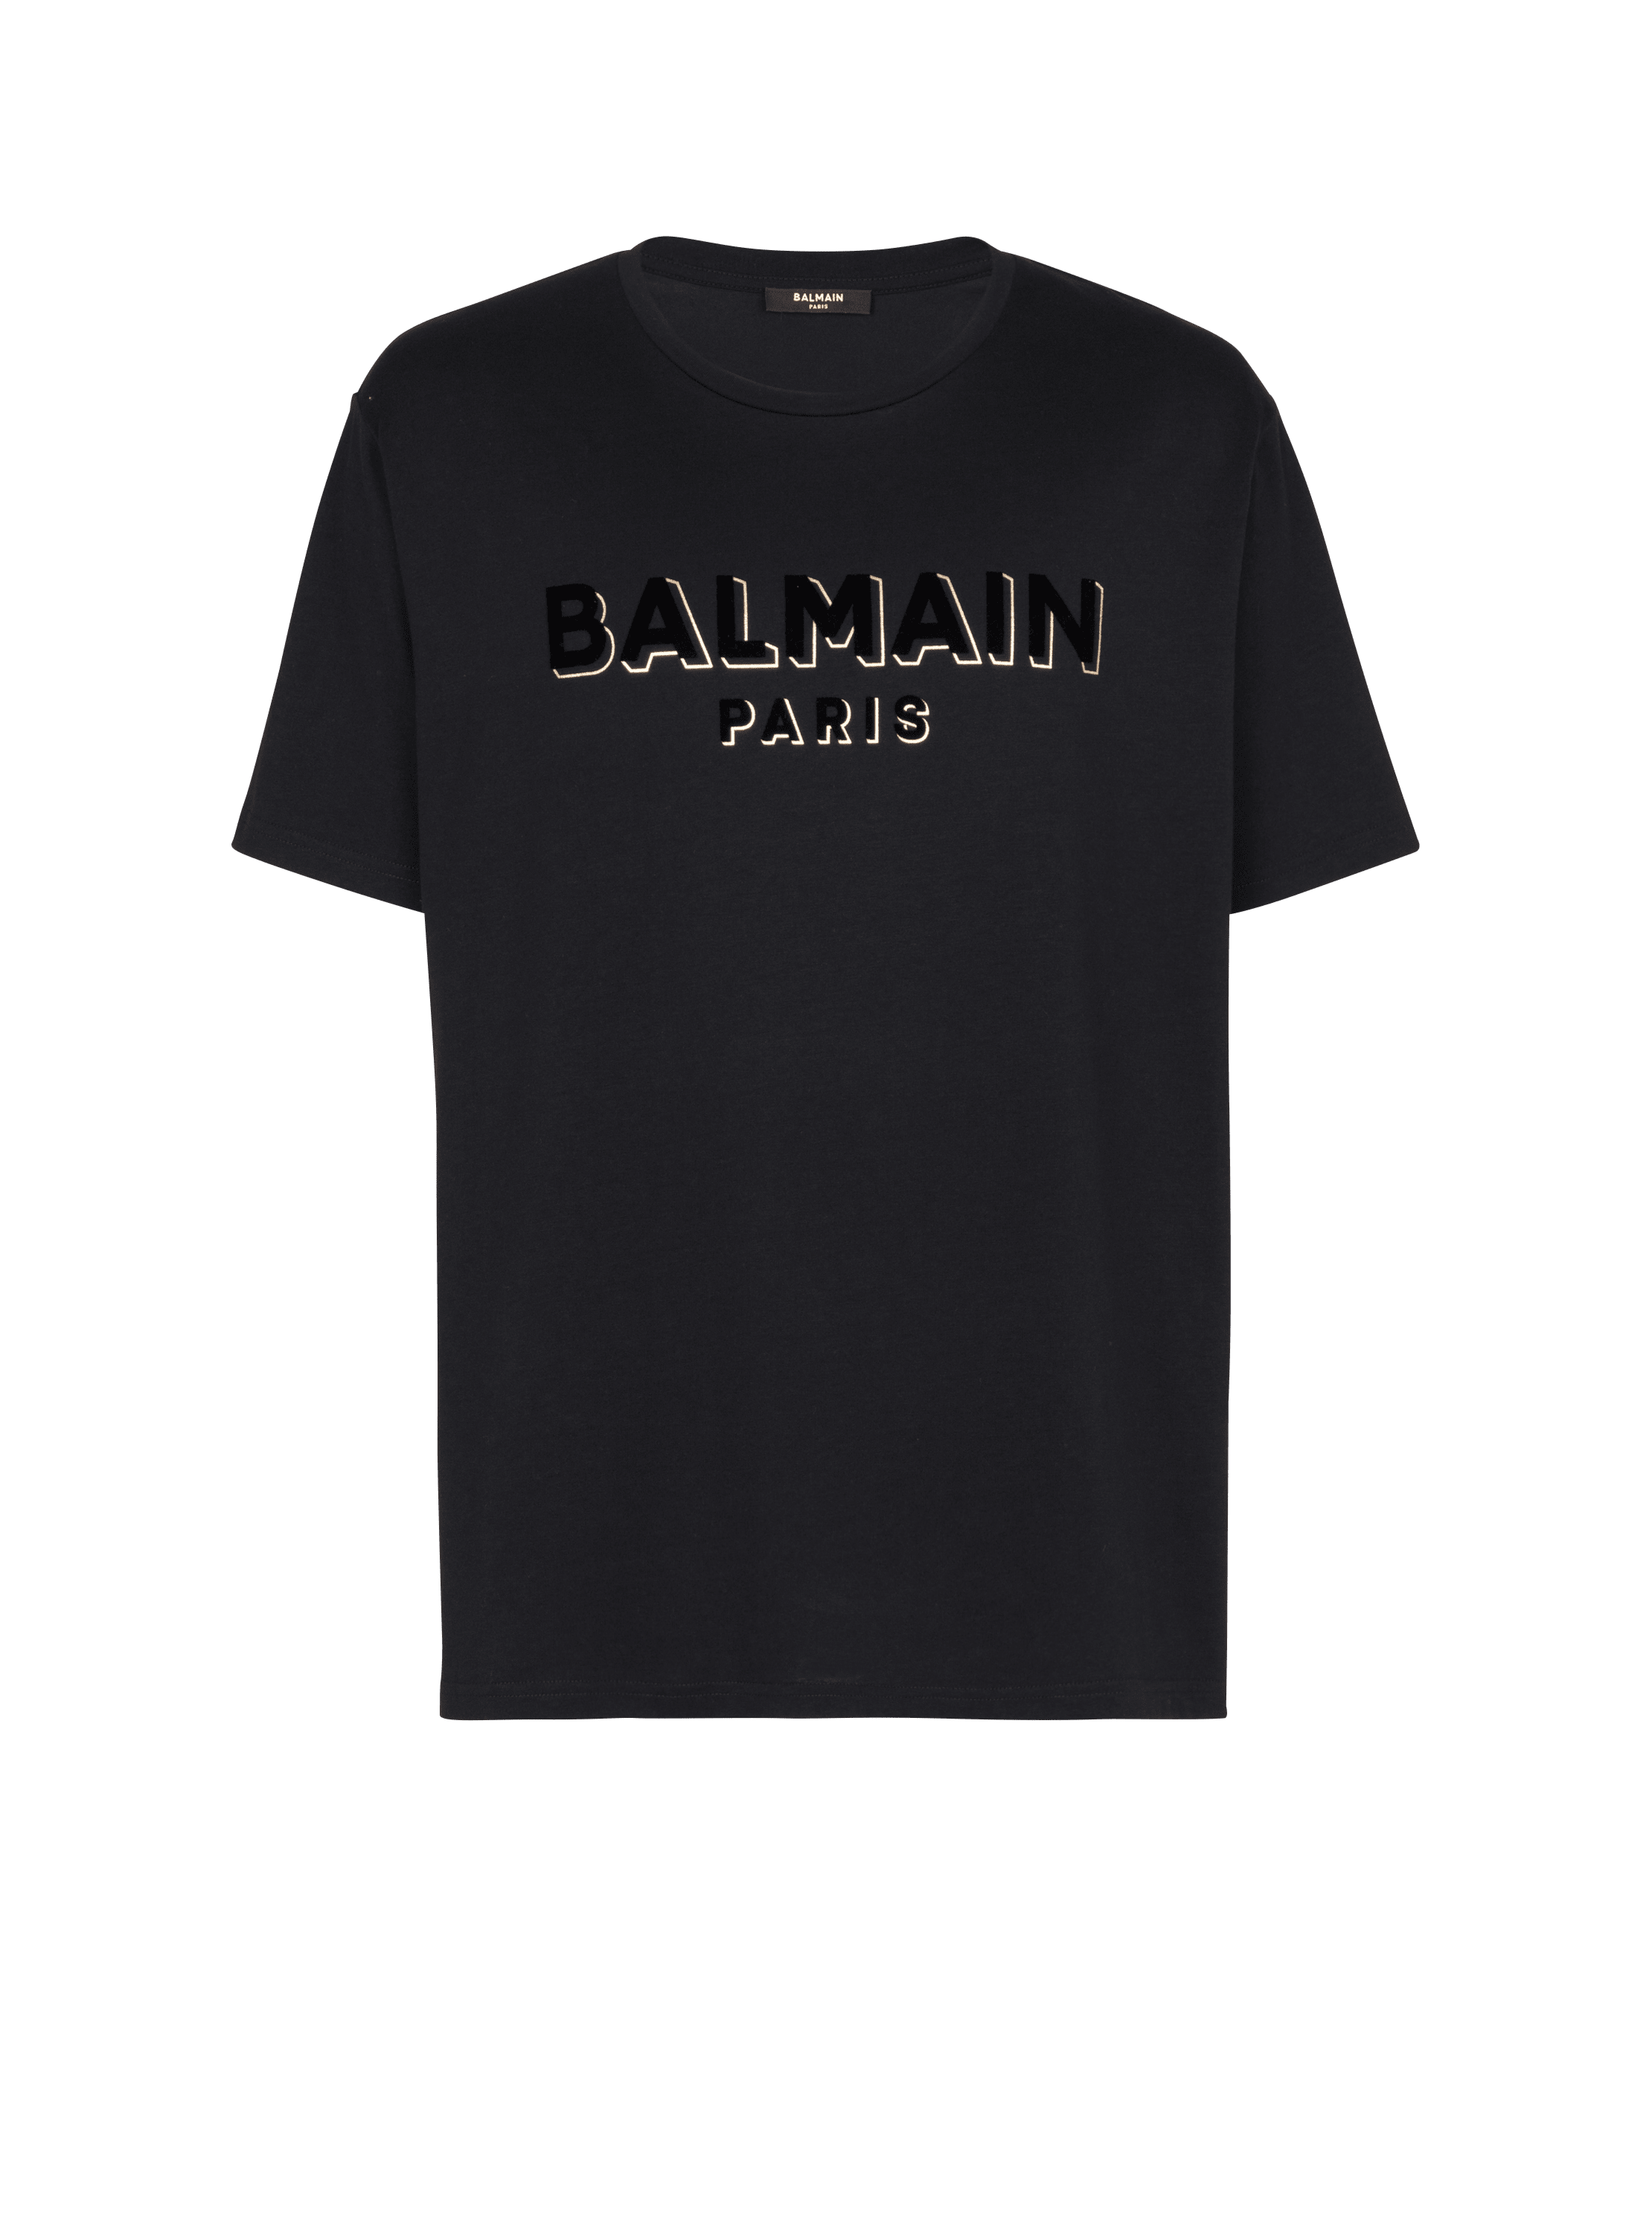 Oversized cotton T-shirt with textured Balmain logo, black, hi-res